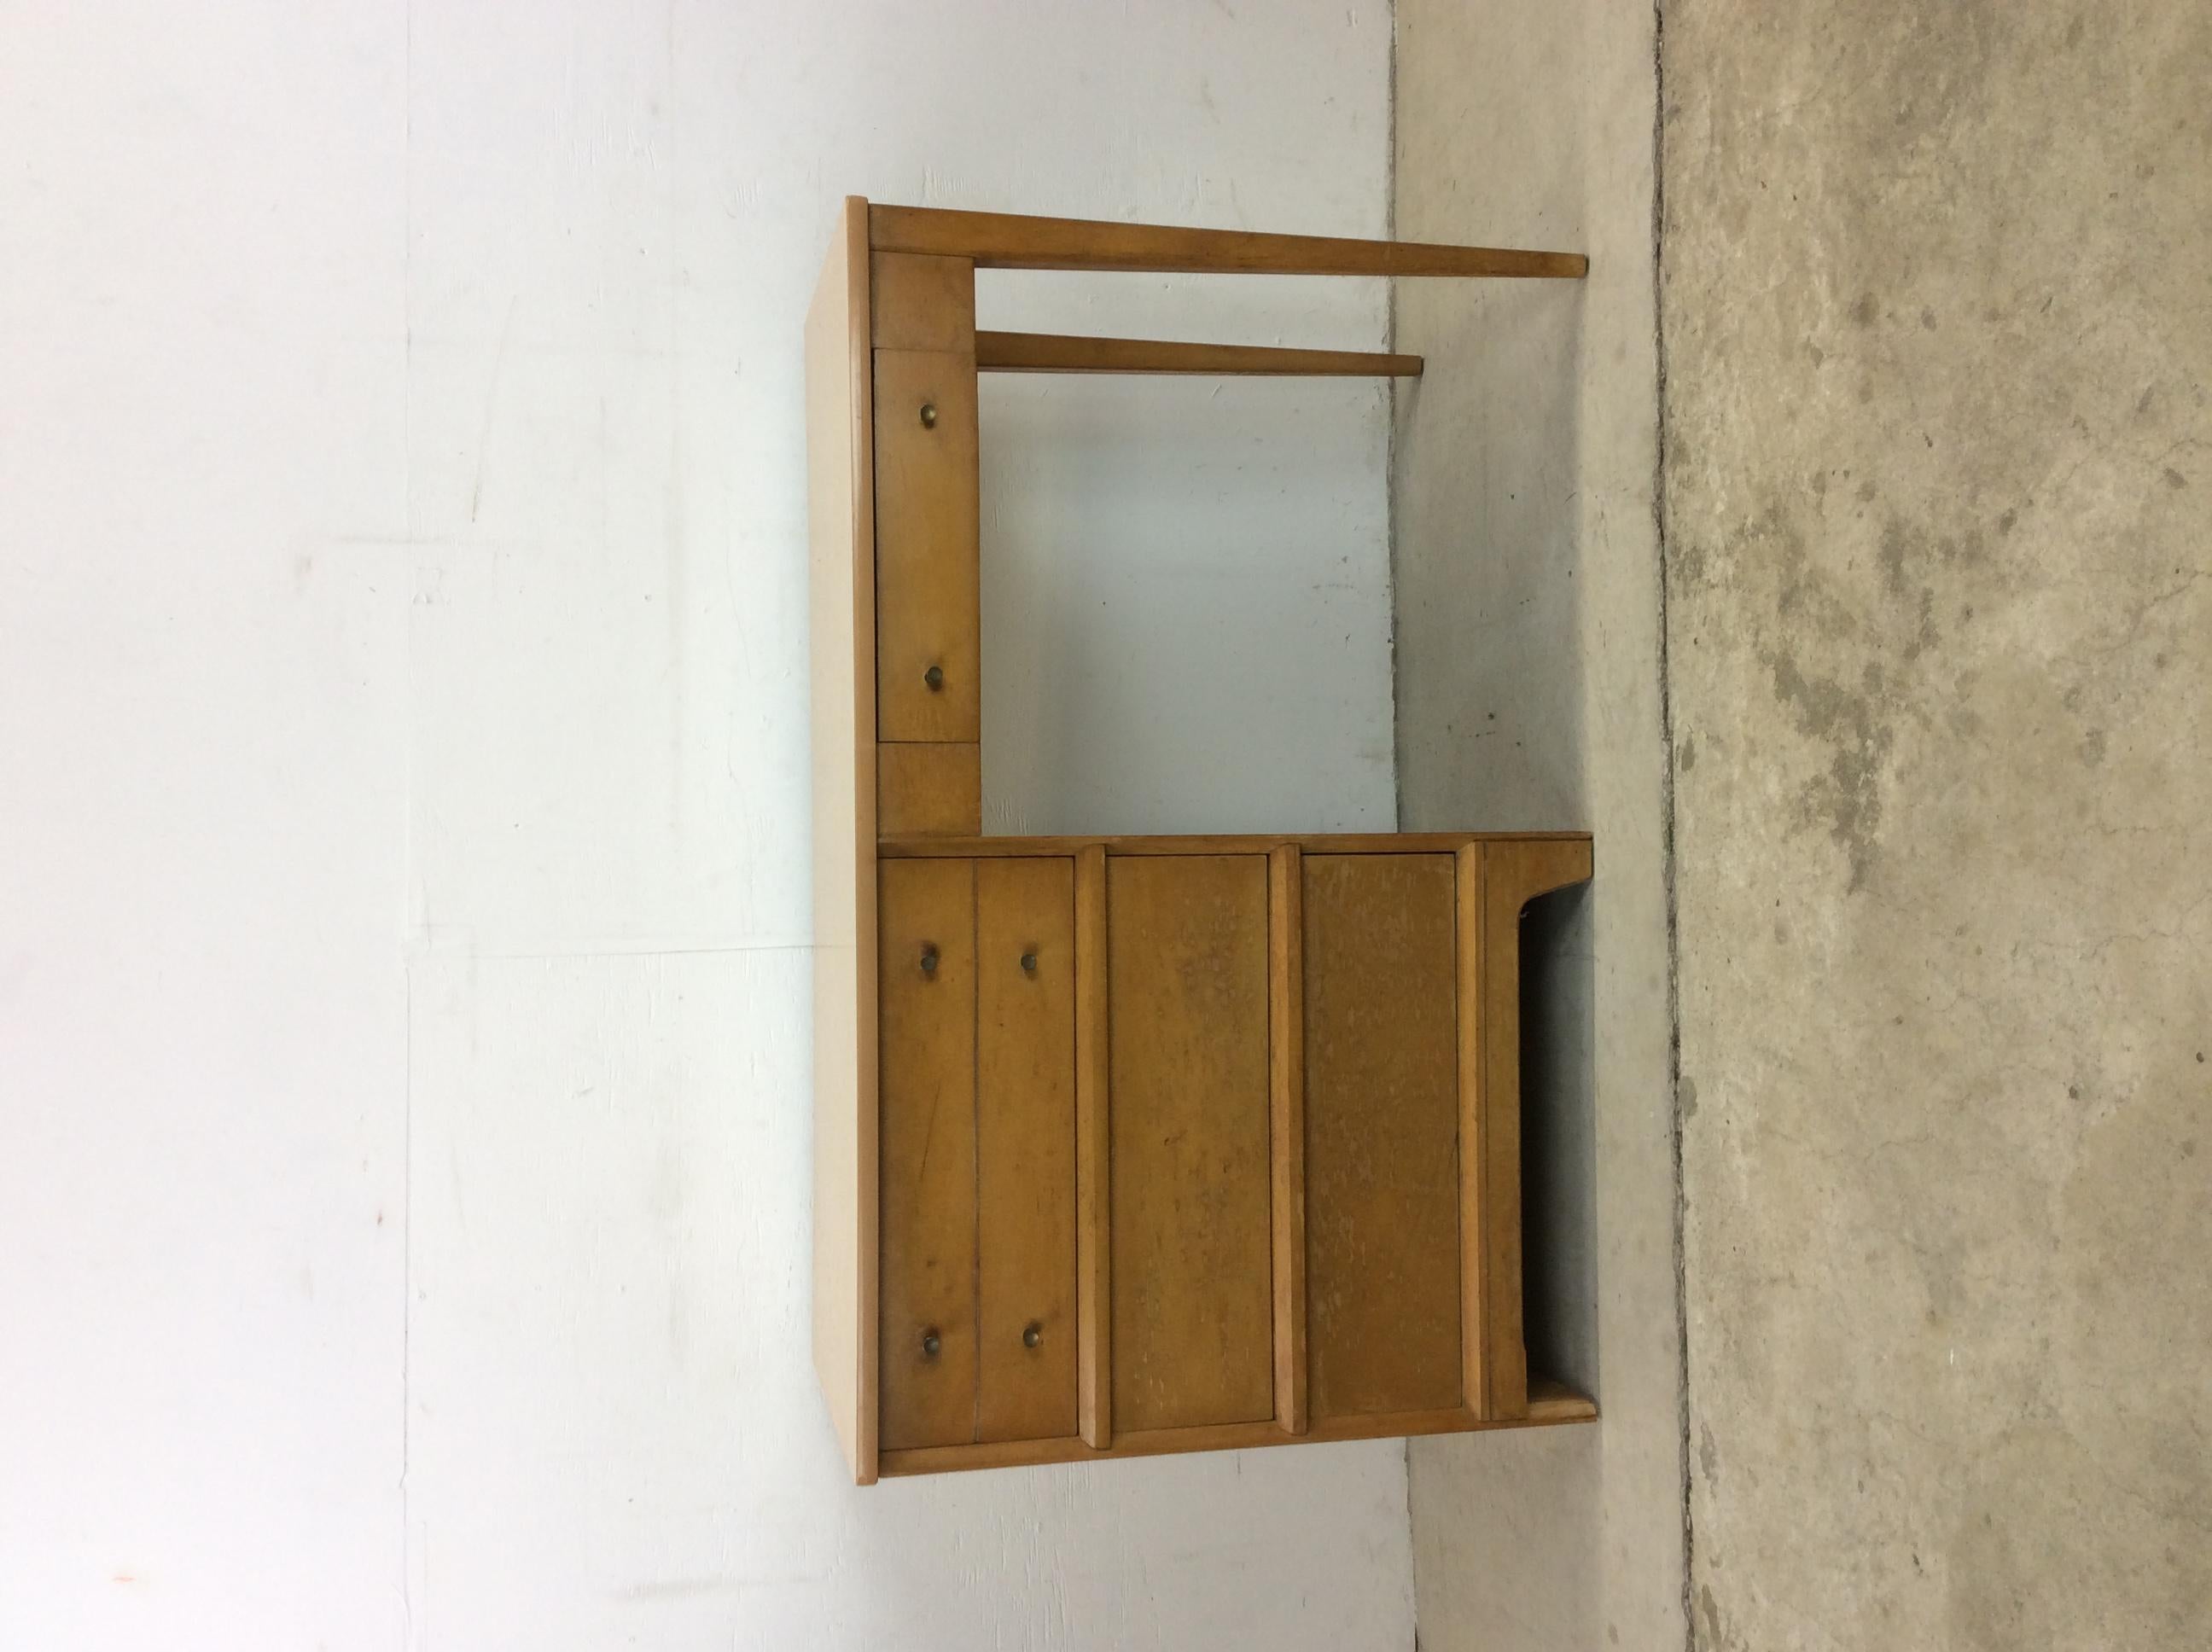 Bureau à 4 tiroirs moderne du milieu du siècle dernier par Baumritter en vente 7